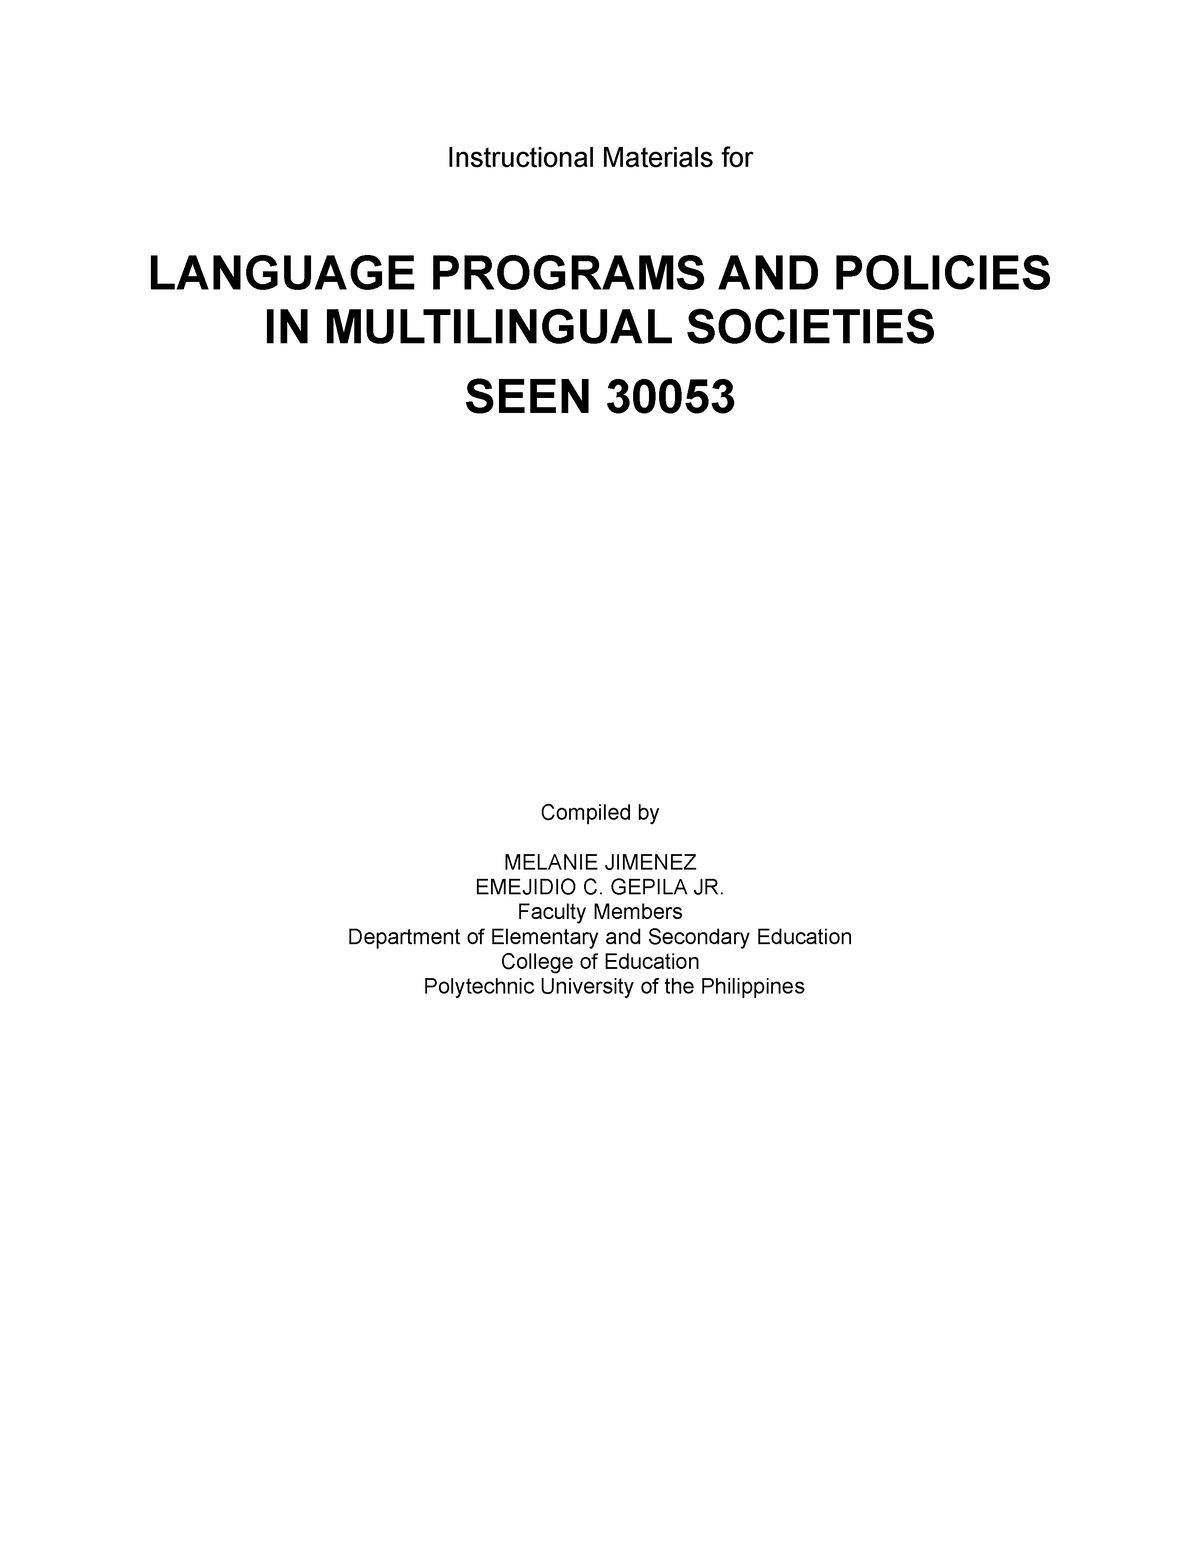 dissertation on language policy